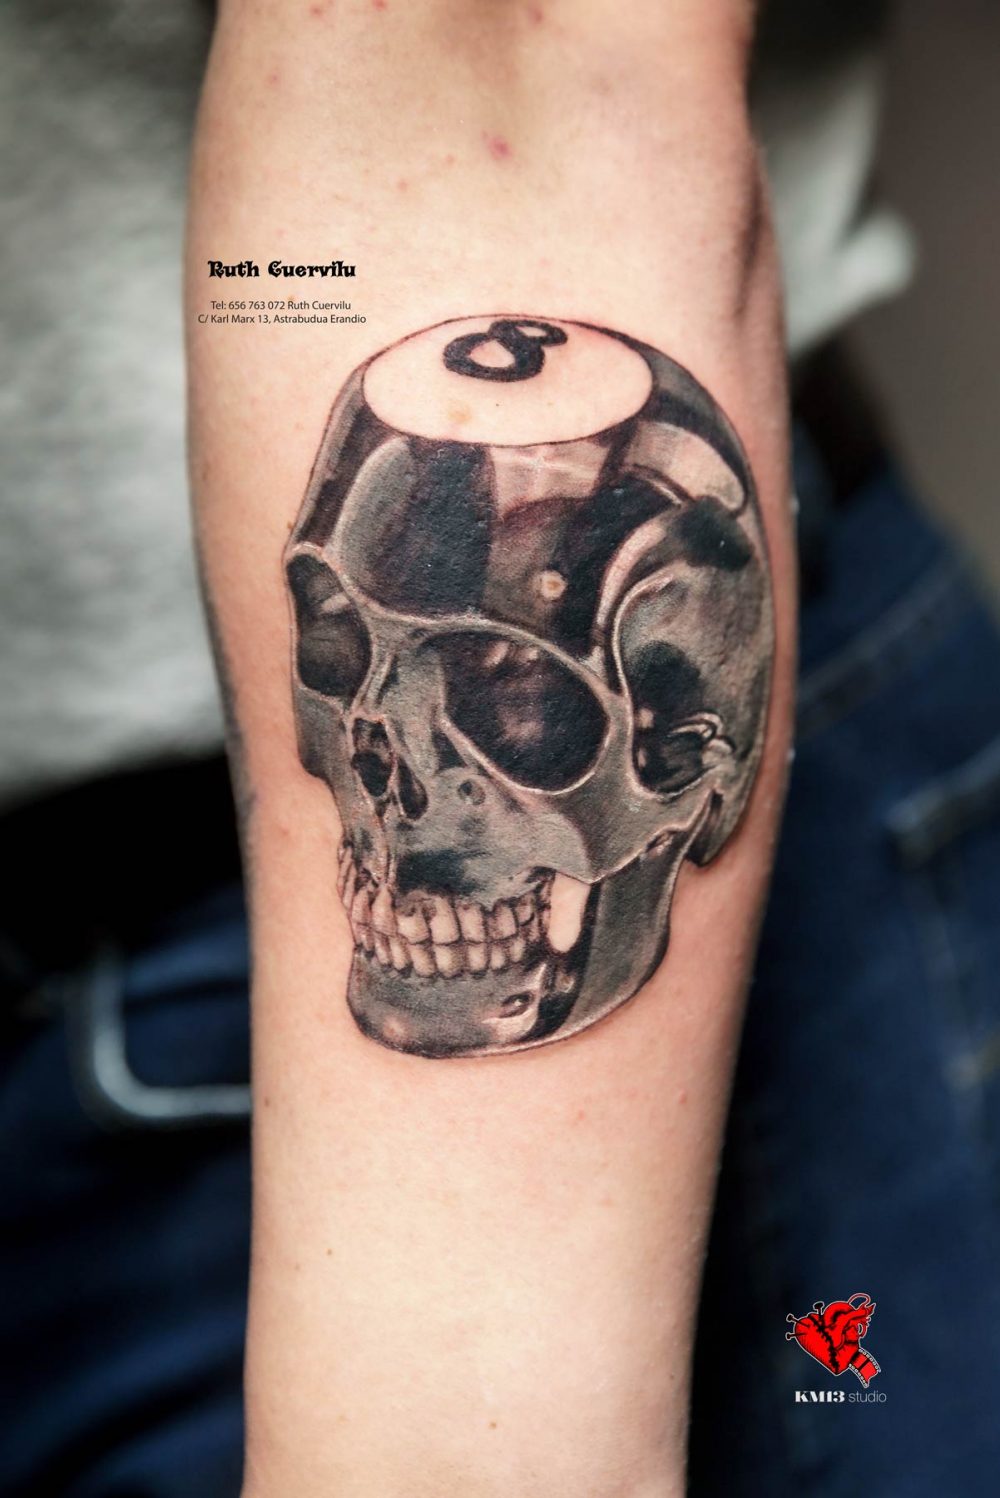 Tatuaje calavera realismo de metal black and grey - ruth cuervilu tattoo km13 studio - estudio de tatuajes erandio astrabudua bilbao bizkaia